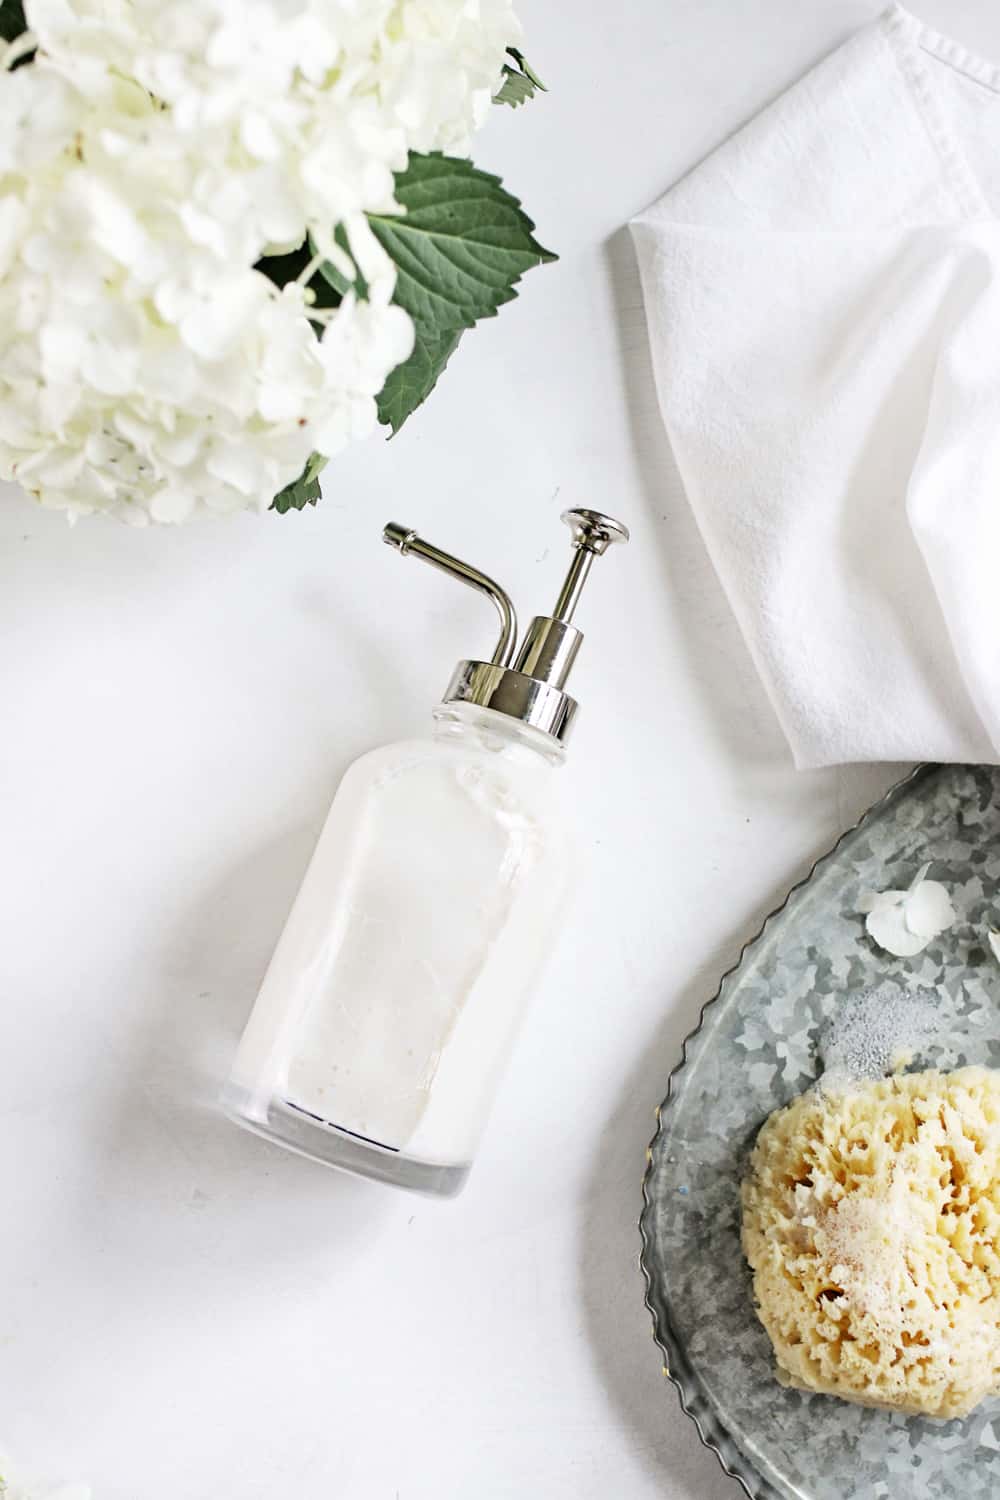 Skin Clearing Body Wash | 11 Ways To Make Homemade Body Wash